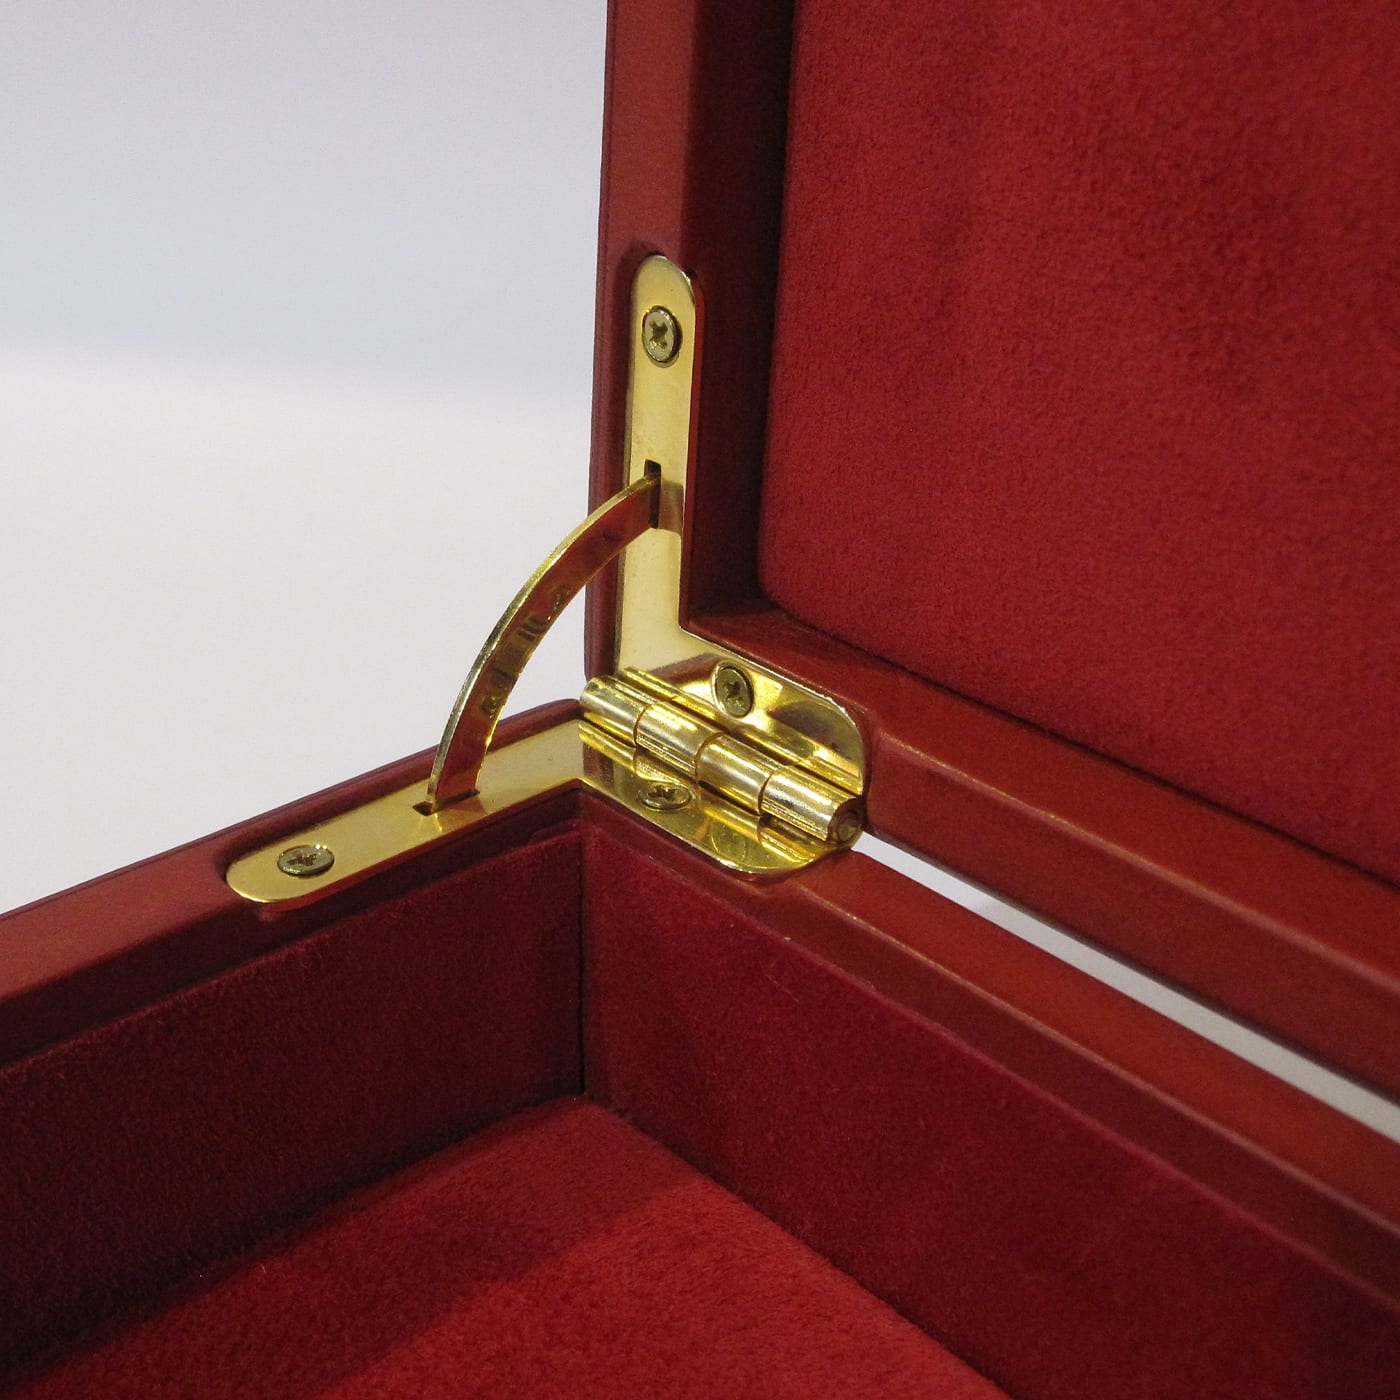 Red Leather Jewelry Box - AtelierGK Firenze